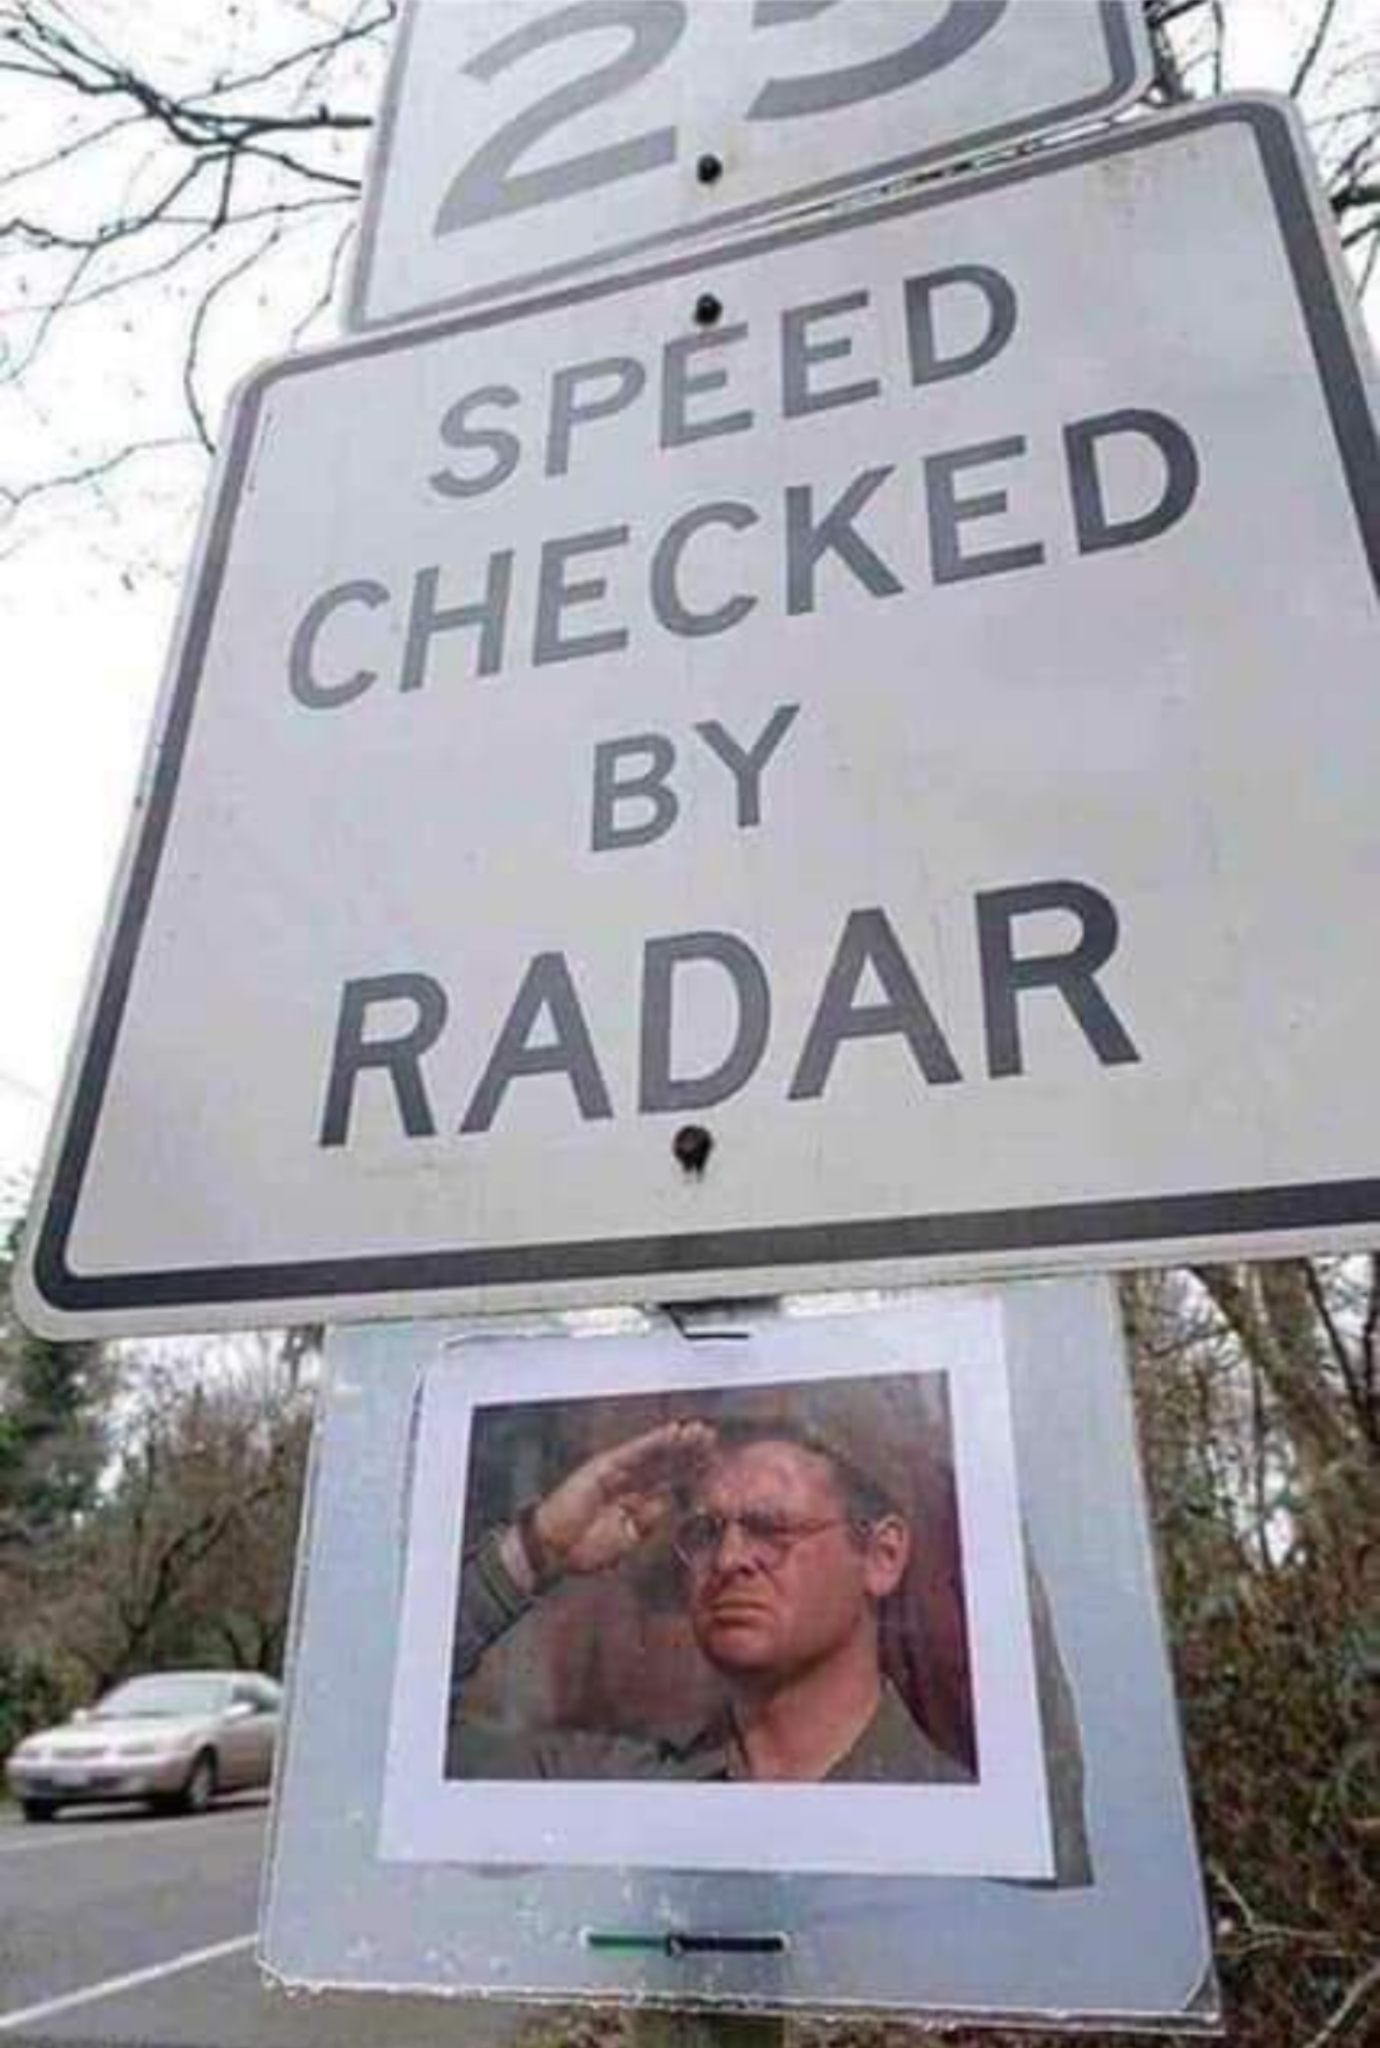 mash radar - Sped Checked By Radar